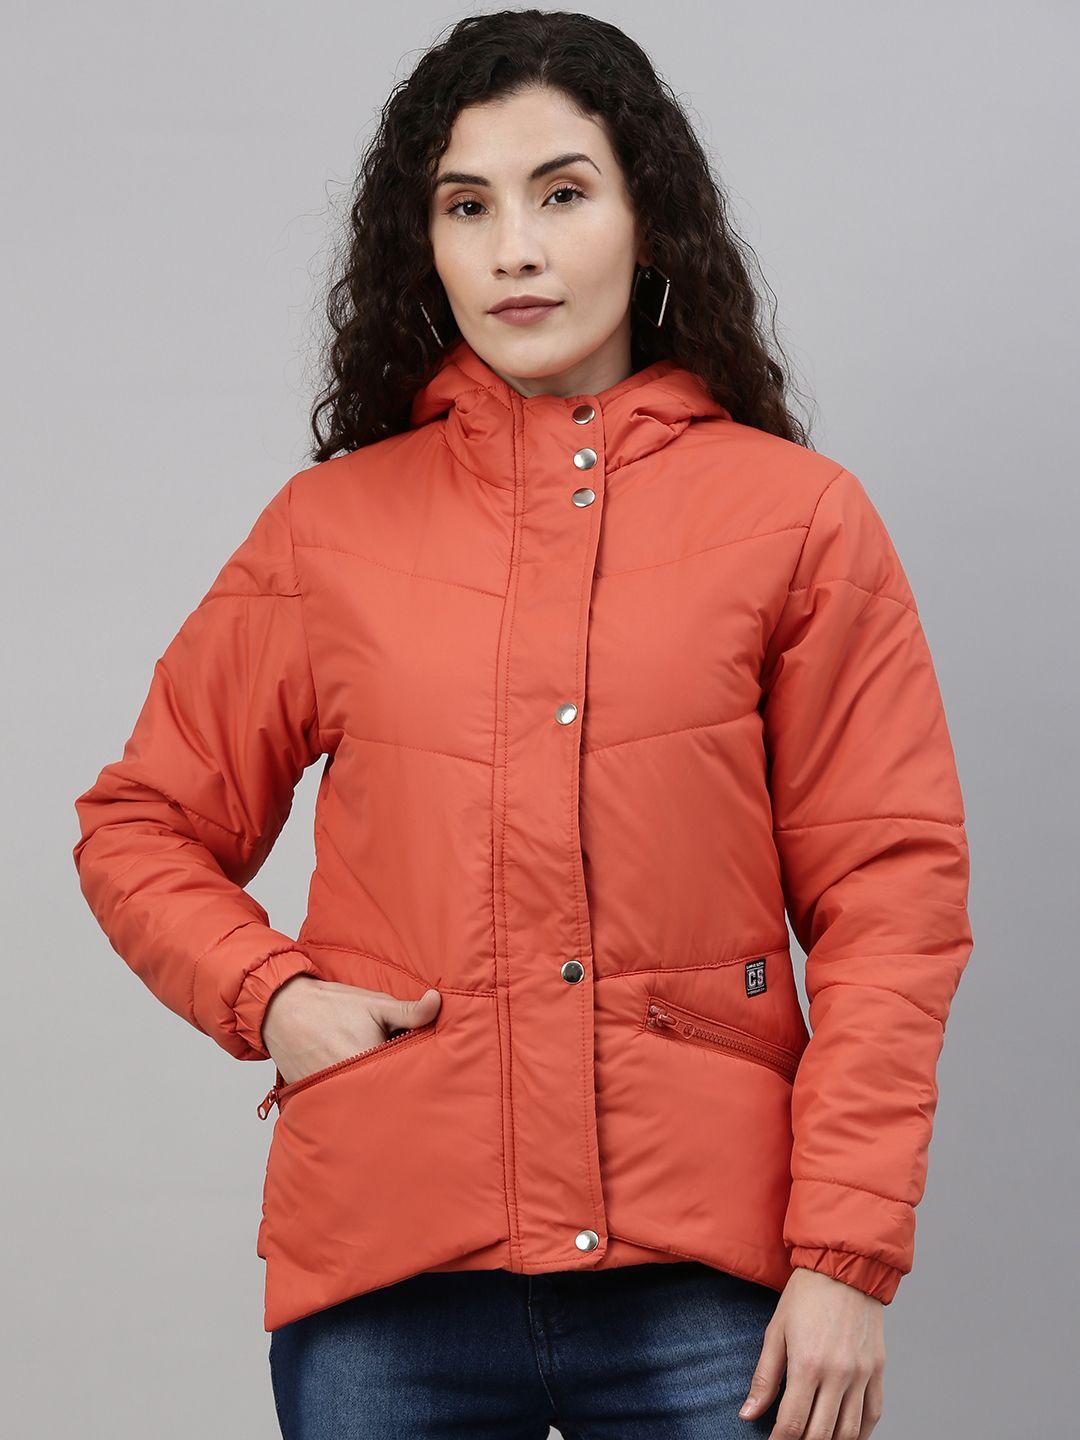 campus-sutra-women-rust-orange-solid-hooded-puffer-jacket